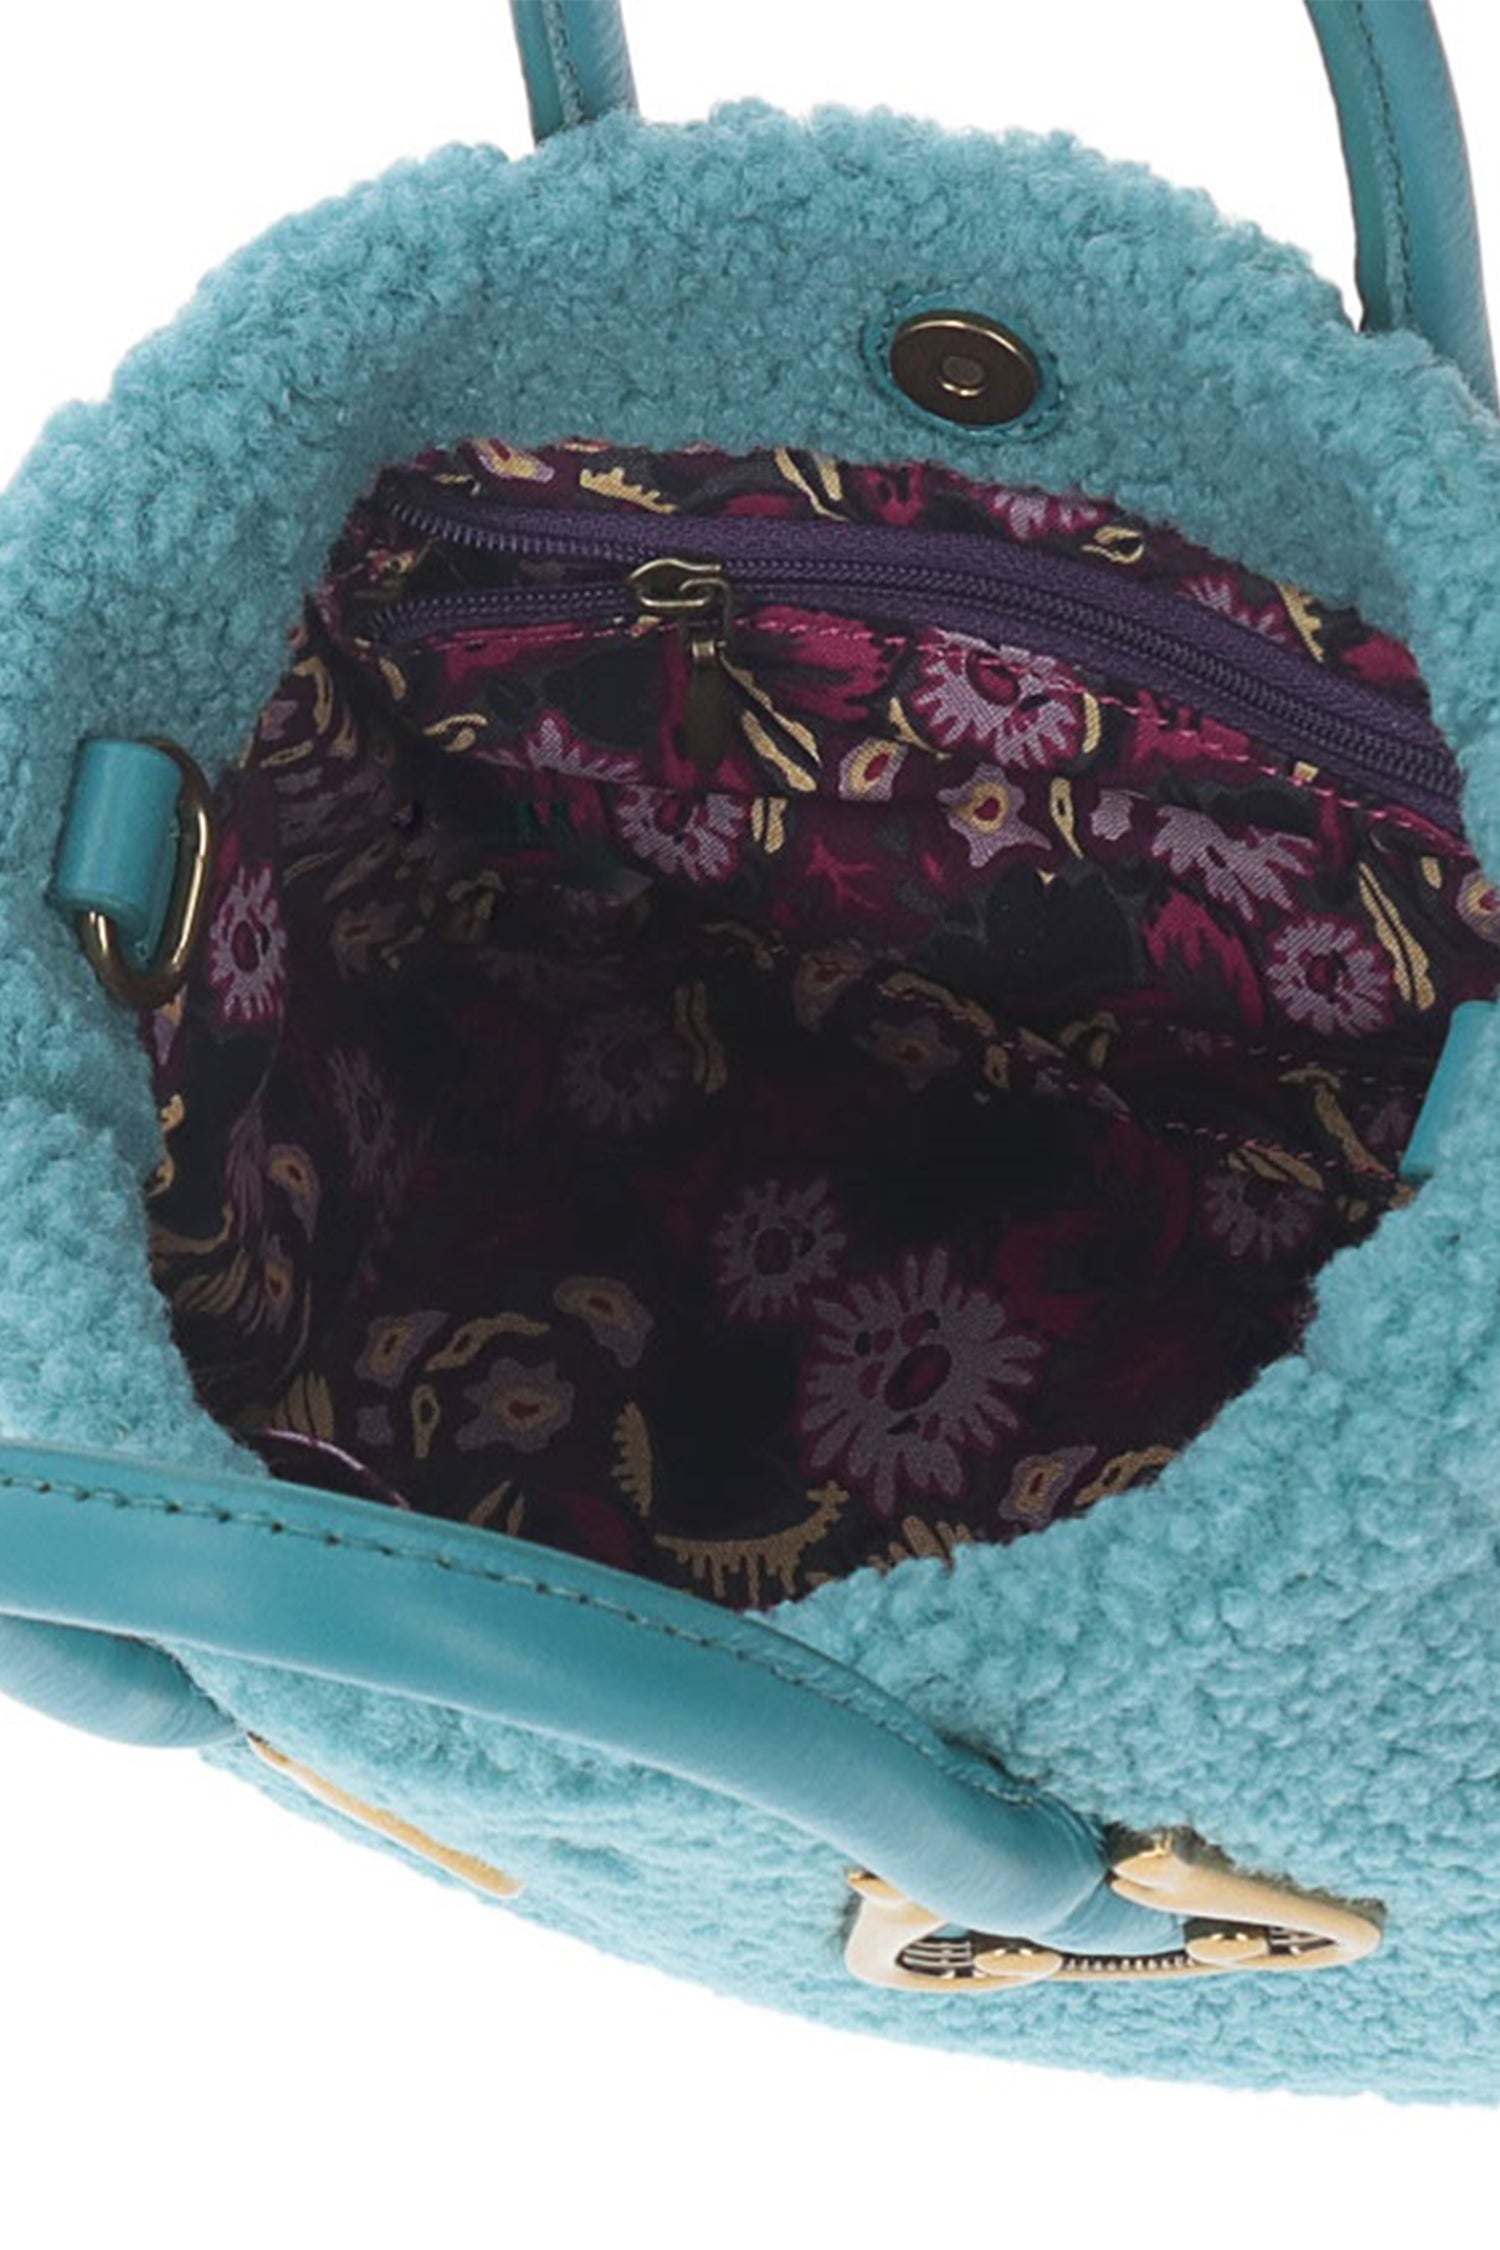 Magnolia Teddy bag Light Blue open has a dark floral design, plenty of space for your belonging